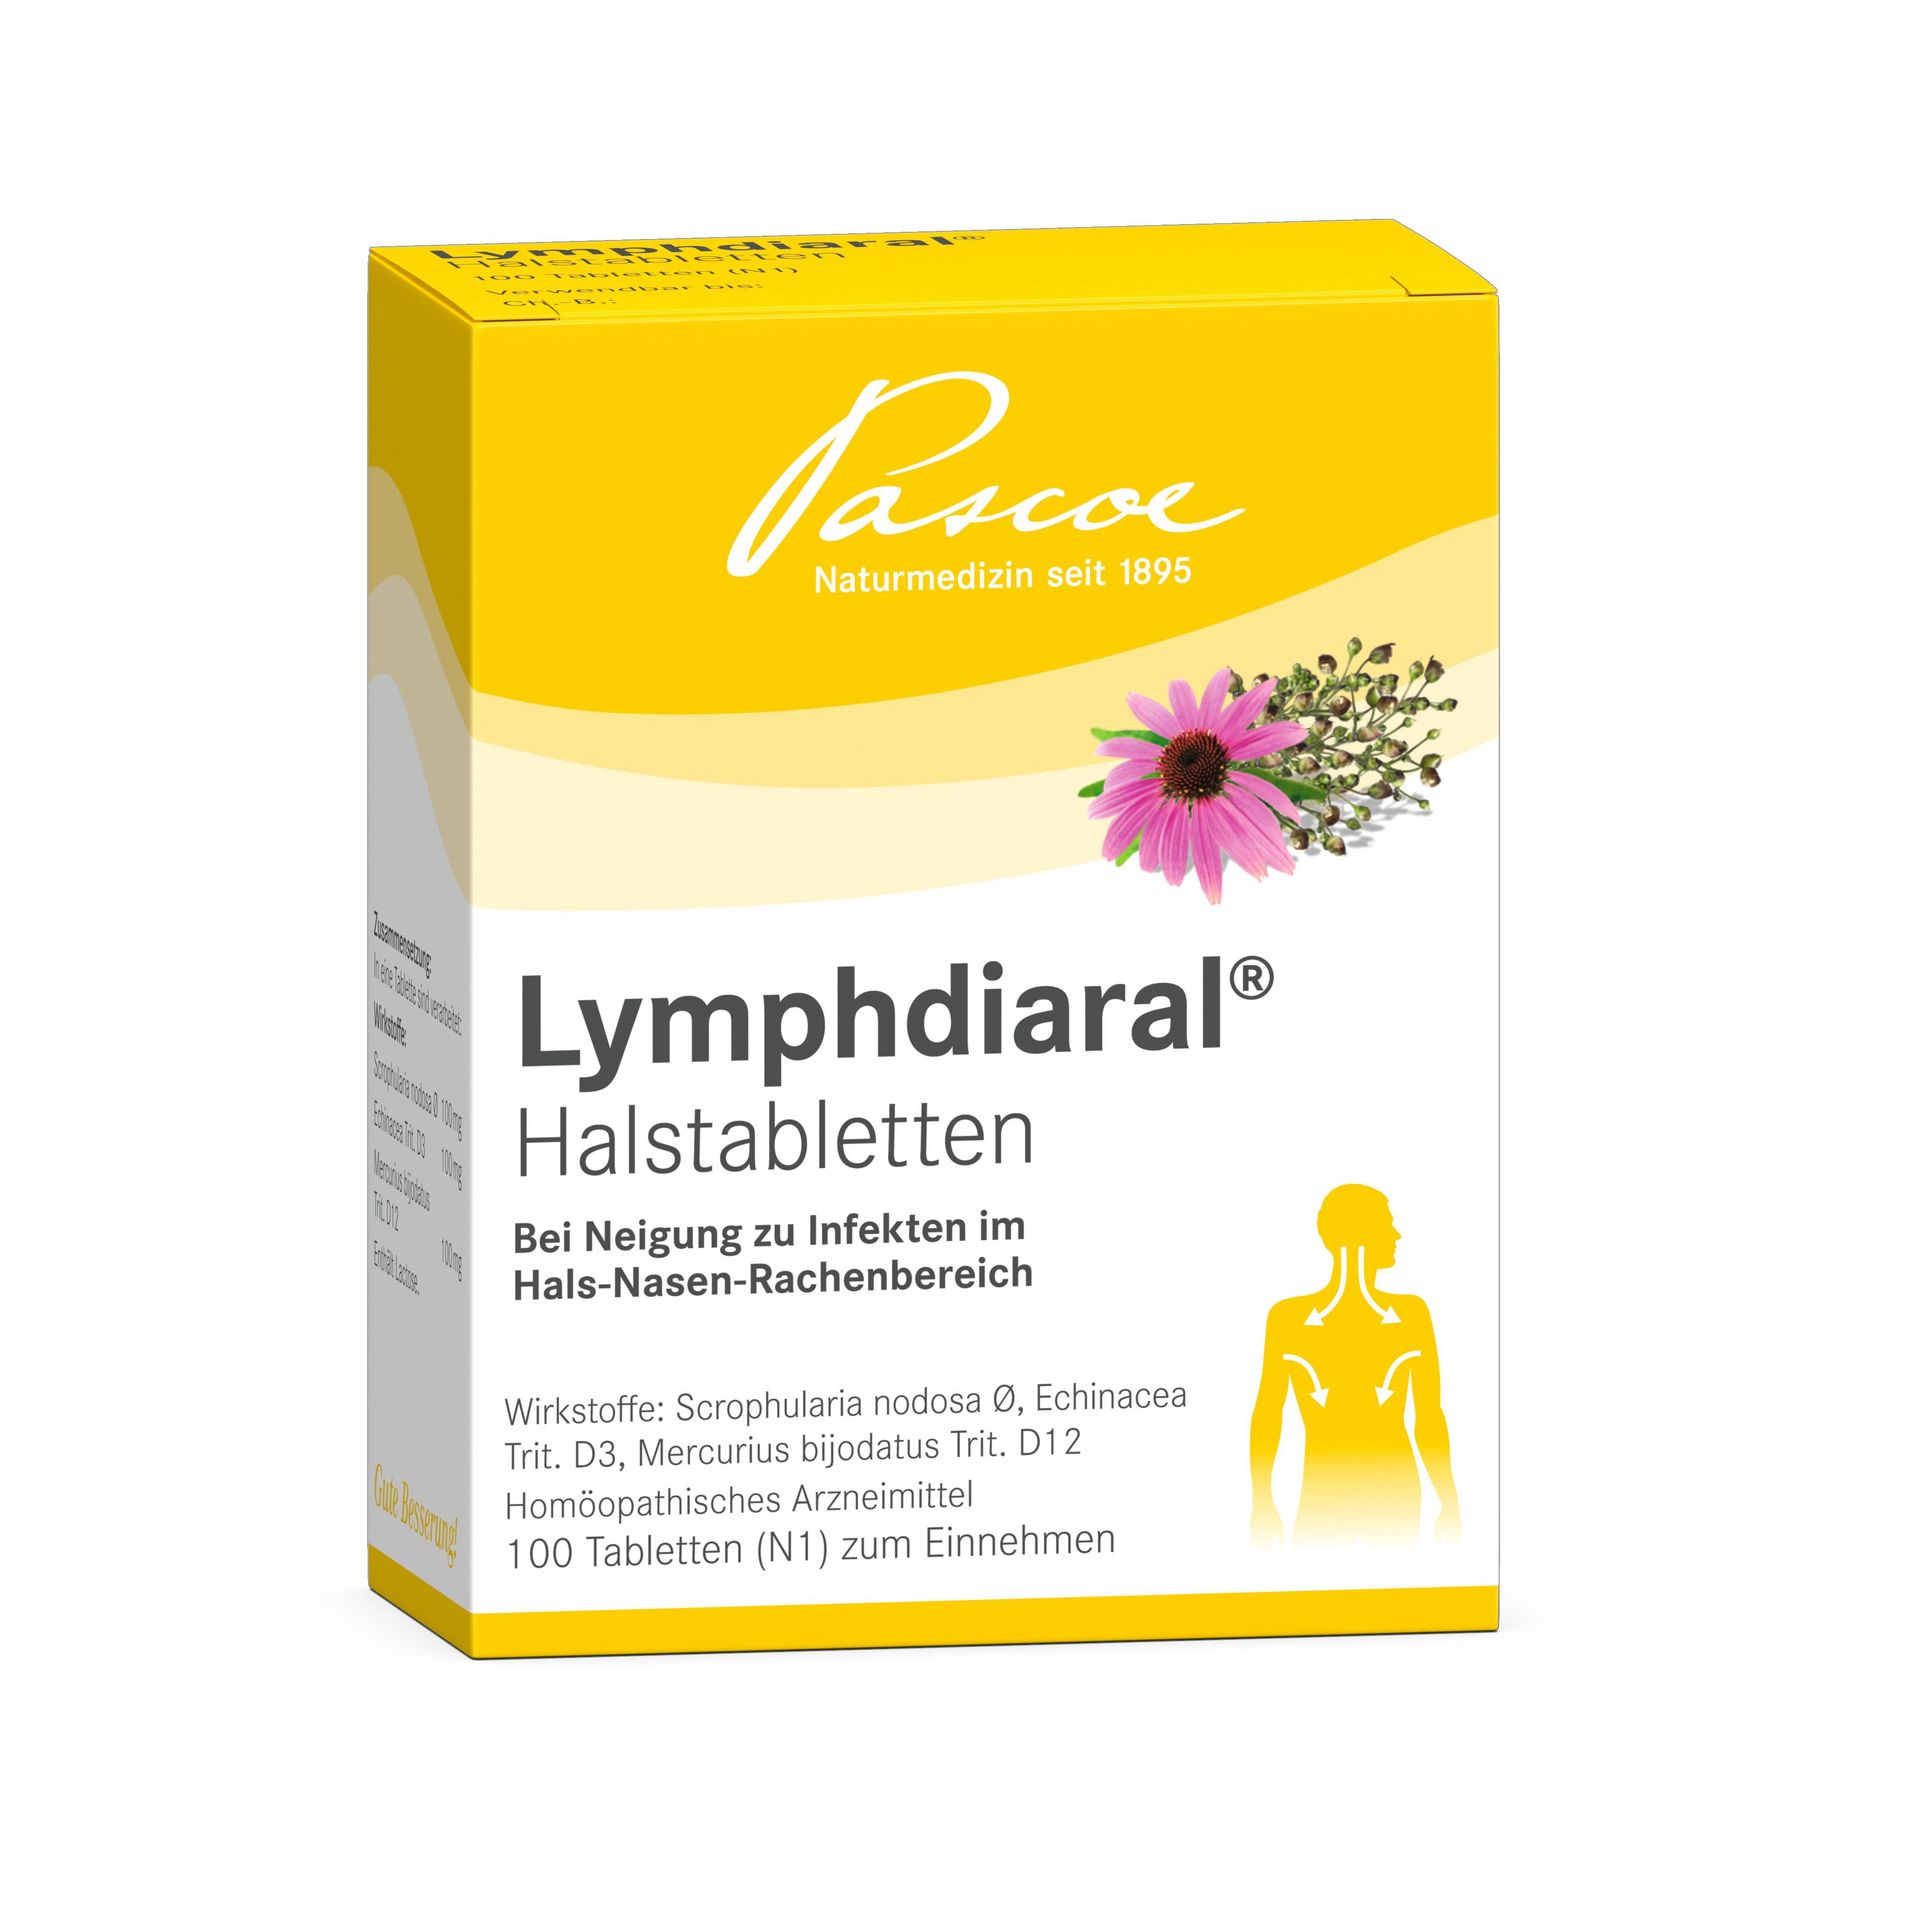 Lymphdiaral Halstabletten 100 Packshot PZN 03898510